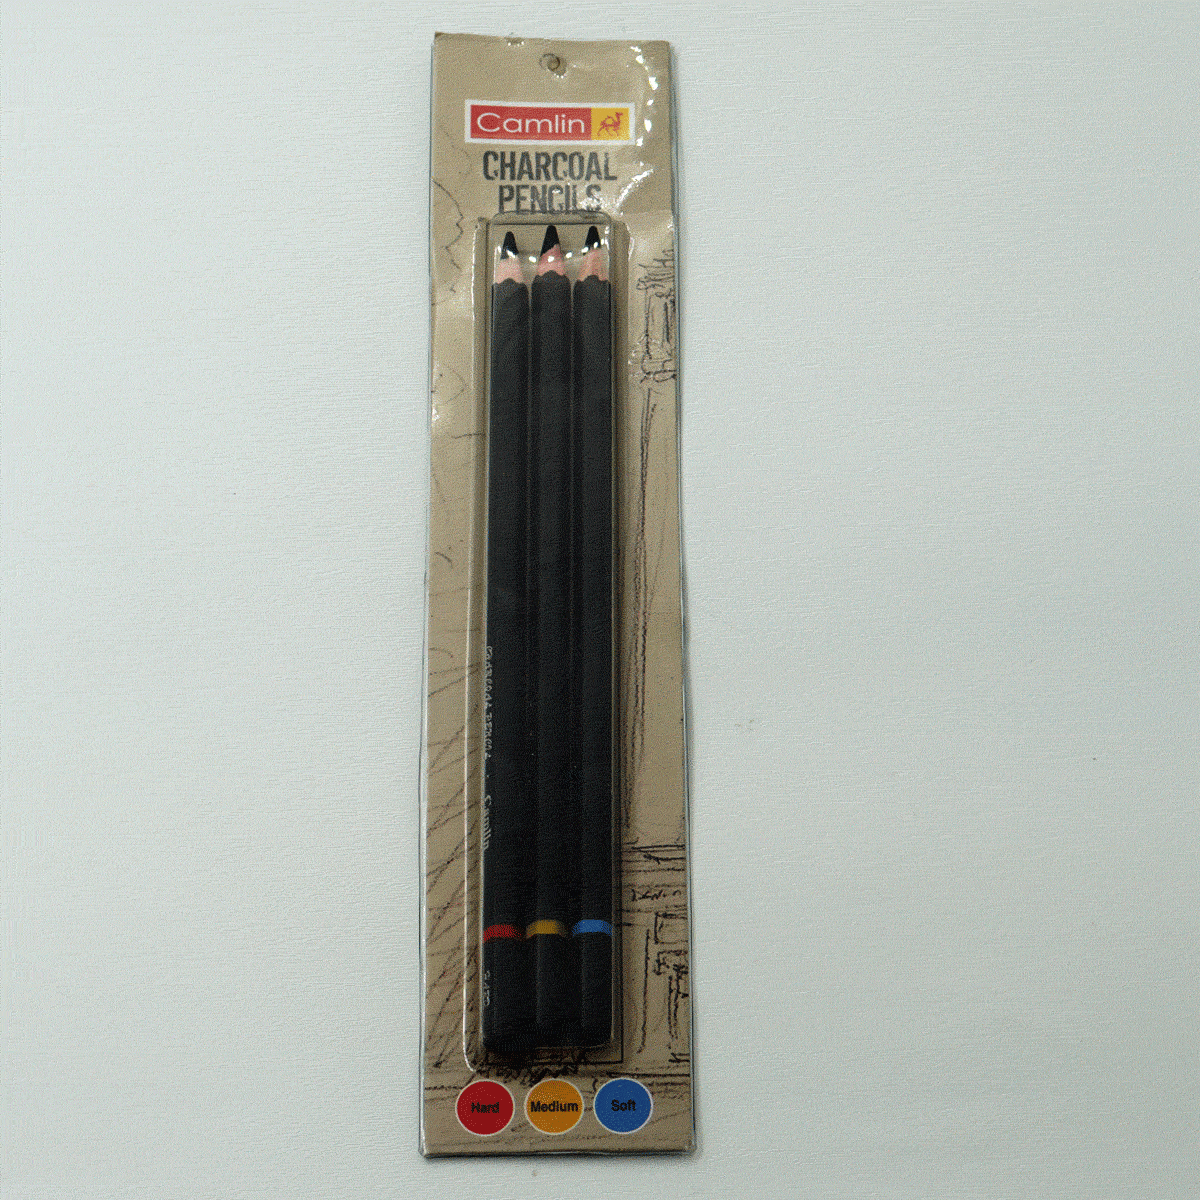 Camlin 700954 Charcoal Pencils SKU 50143